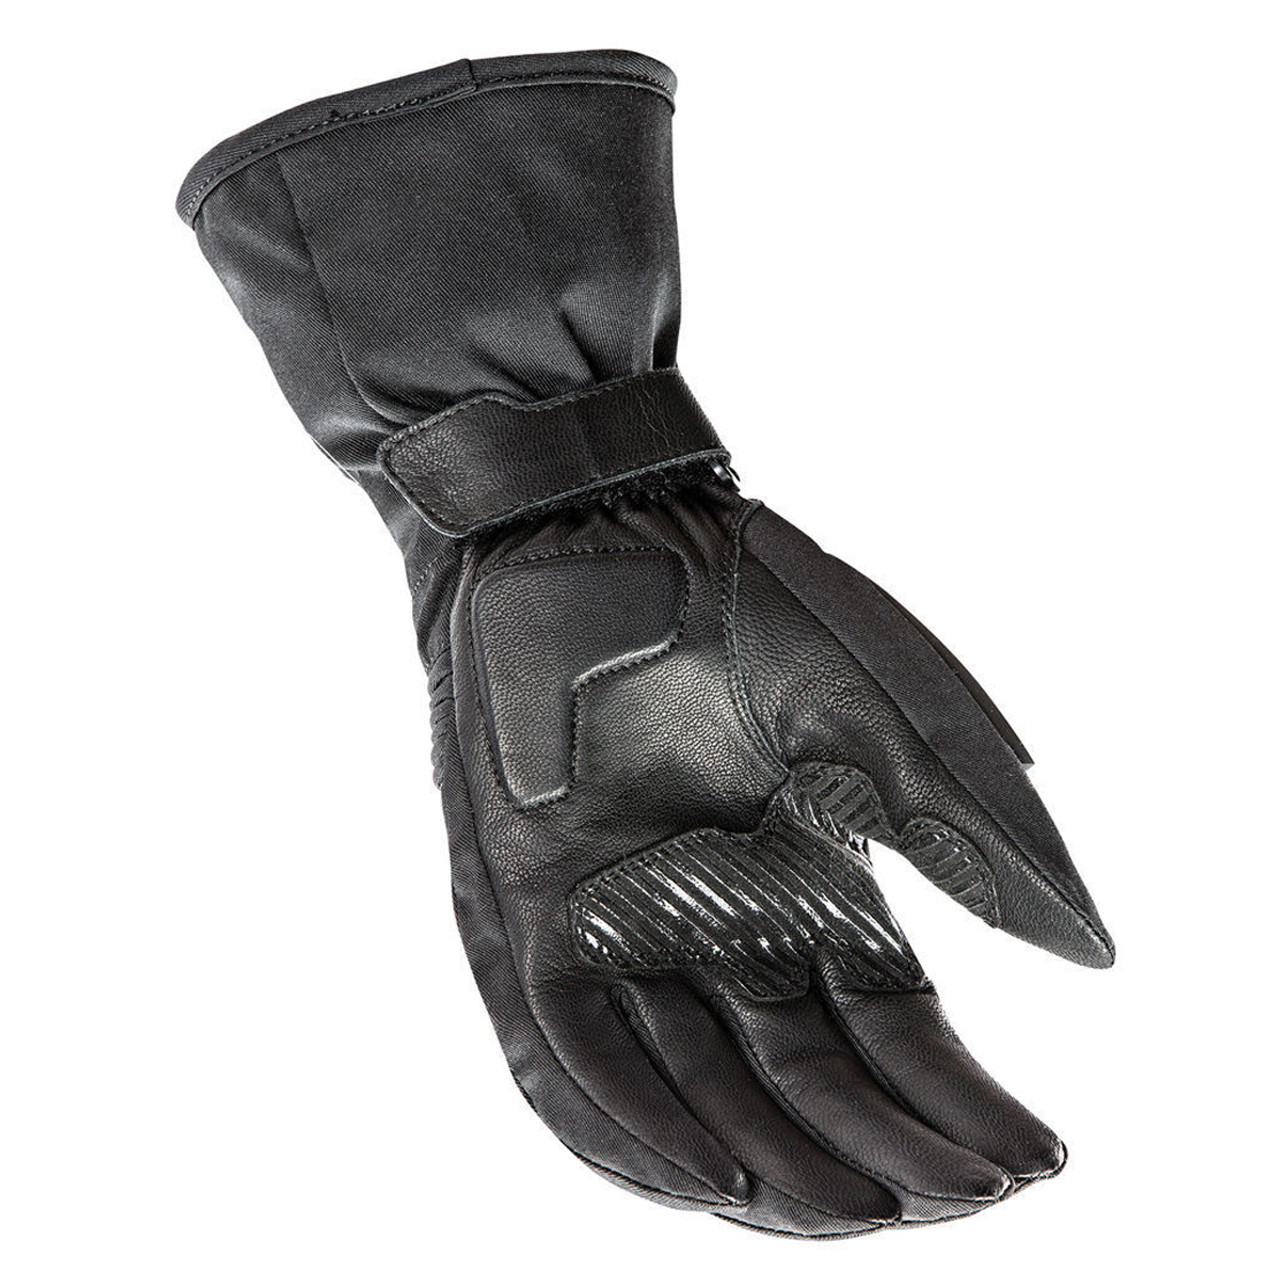 JOE ROCKET BALLISTIC FUSION BLACK Textile Gloves FREE SHIPPING 